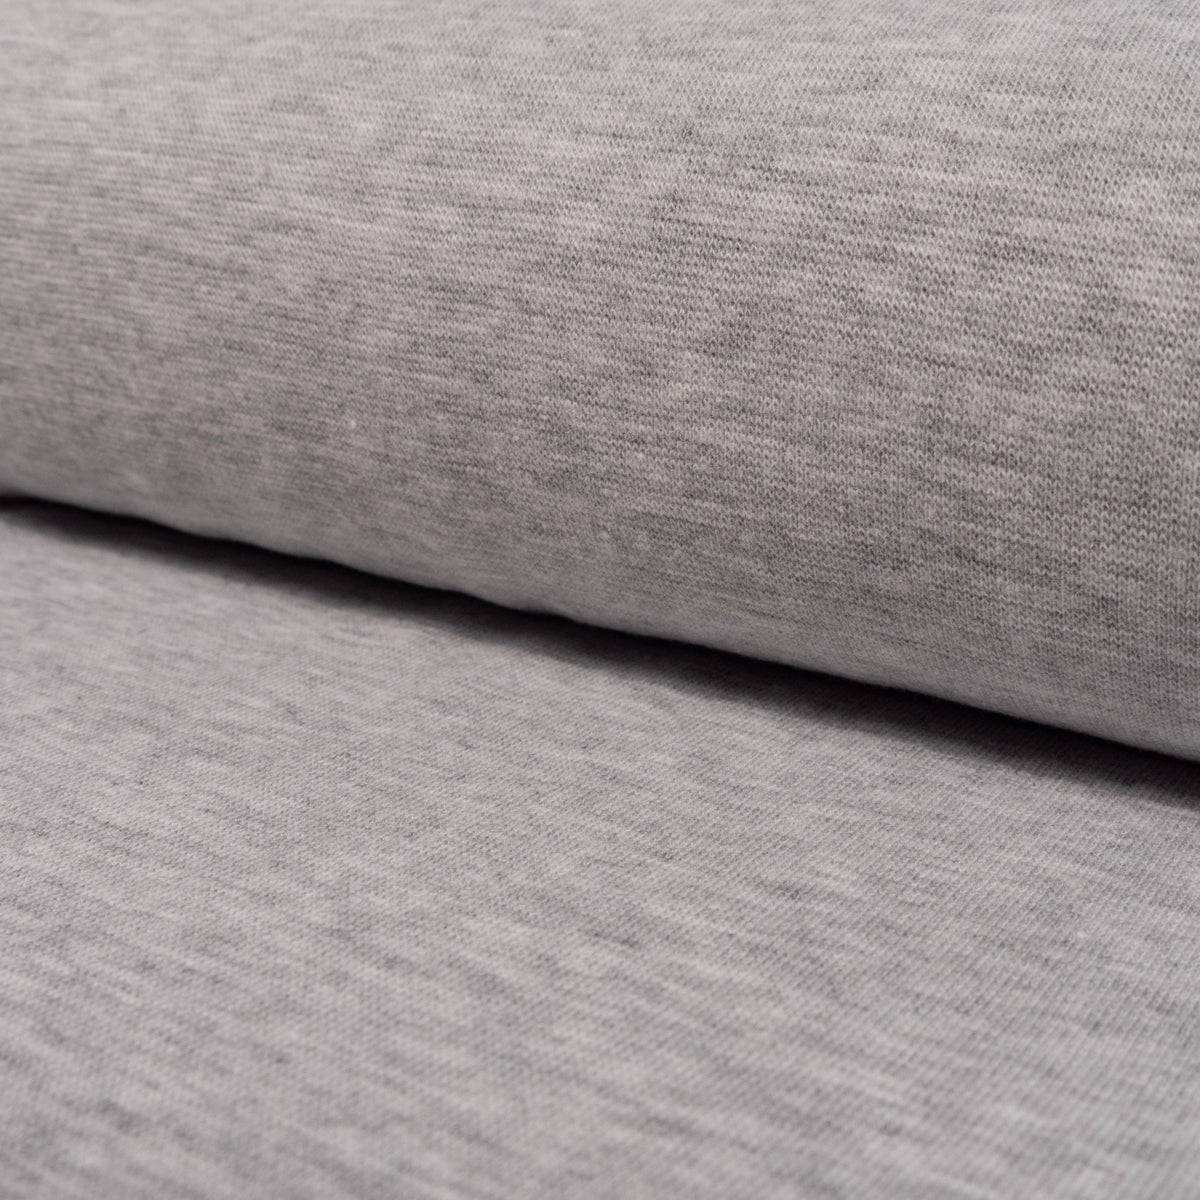 grey fabric pattern